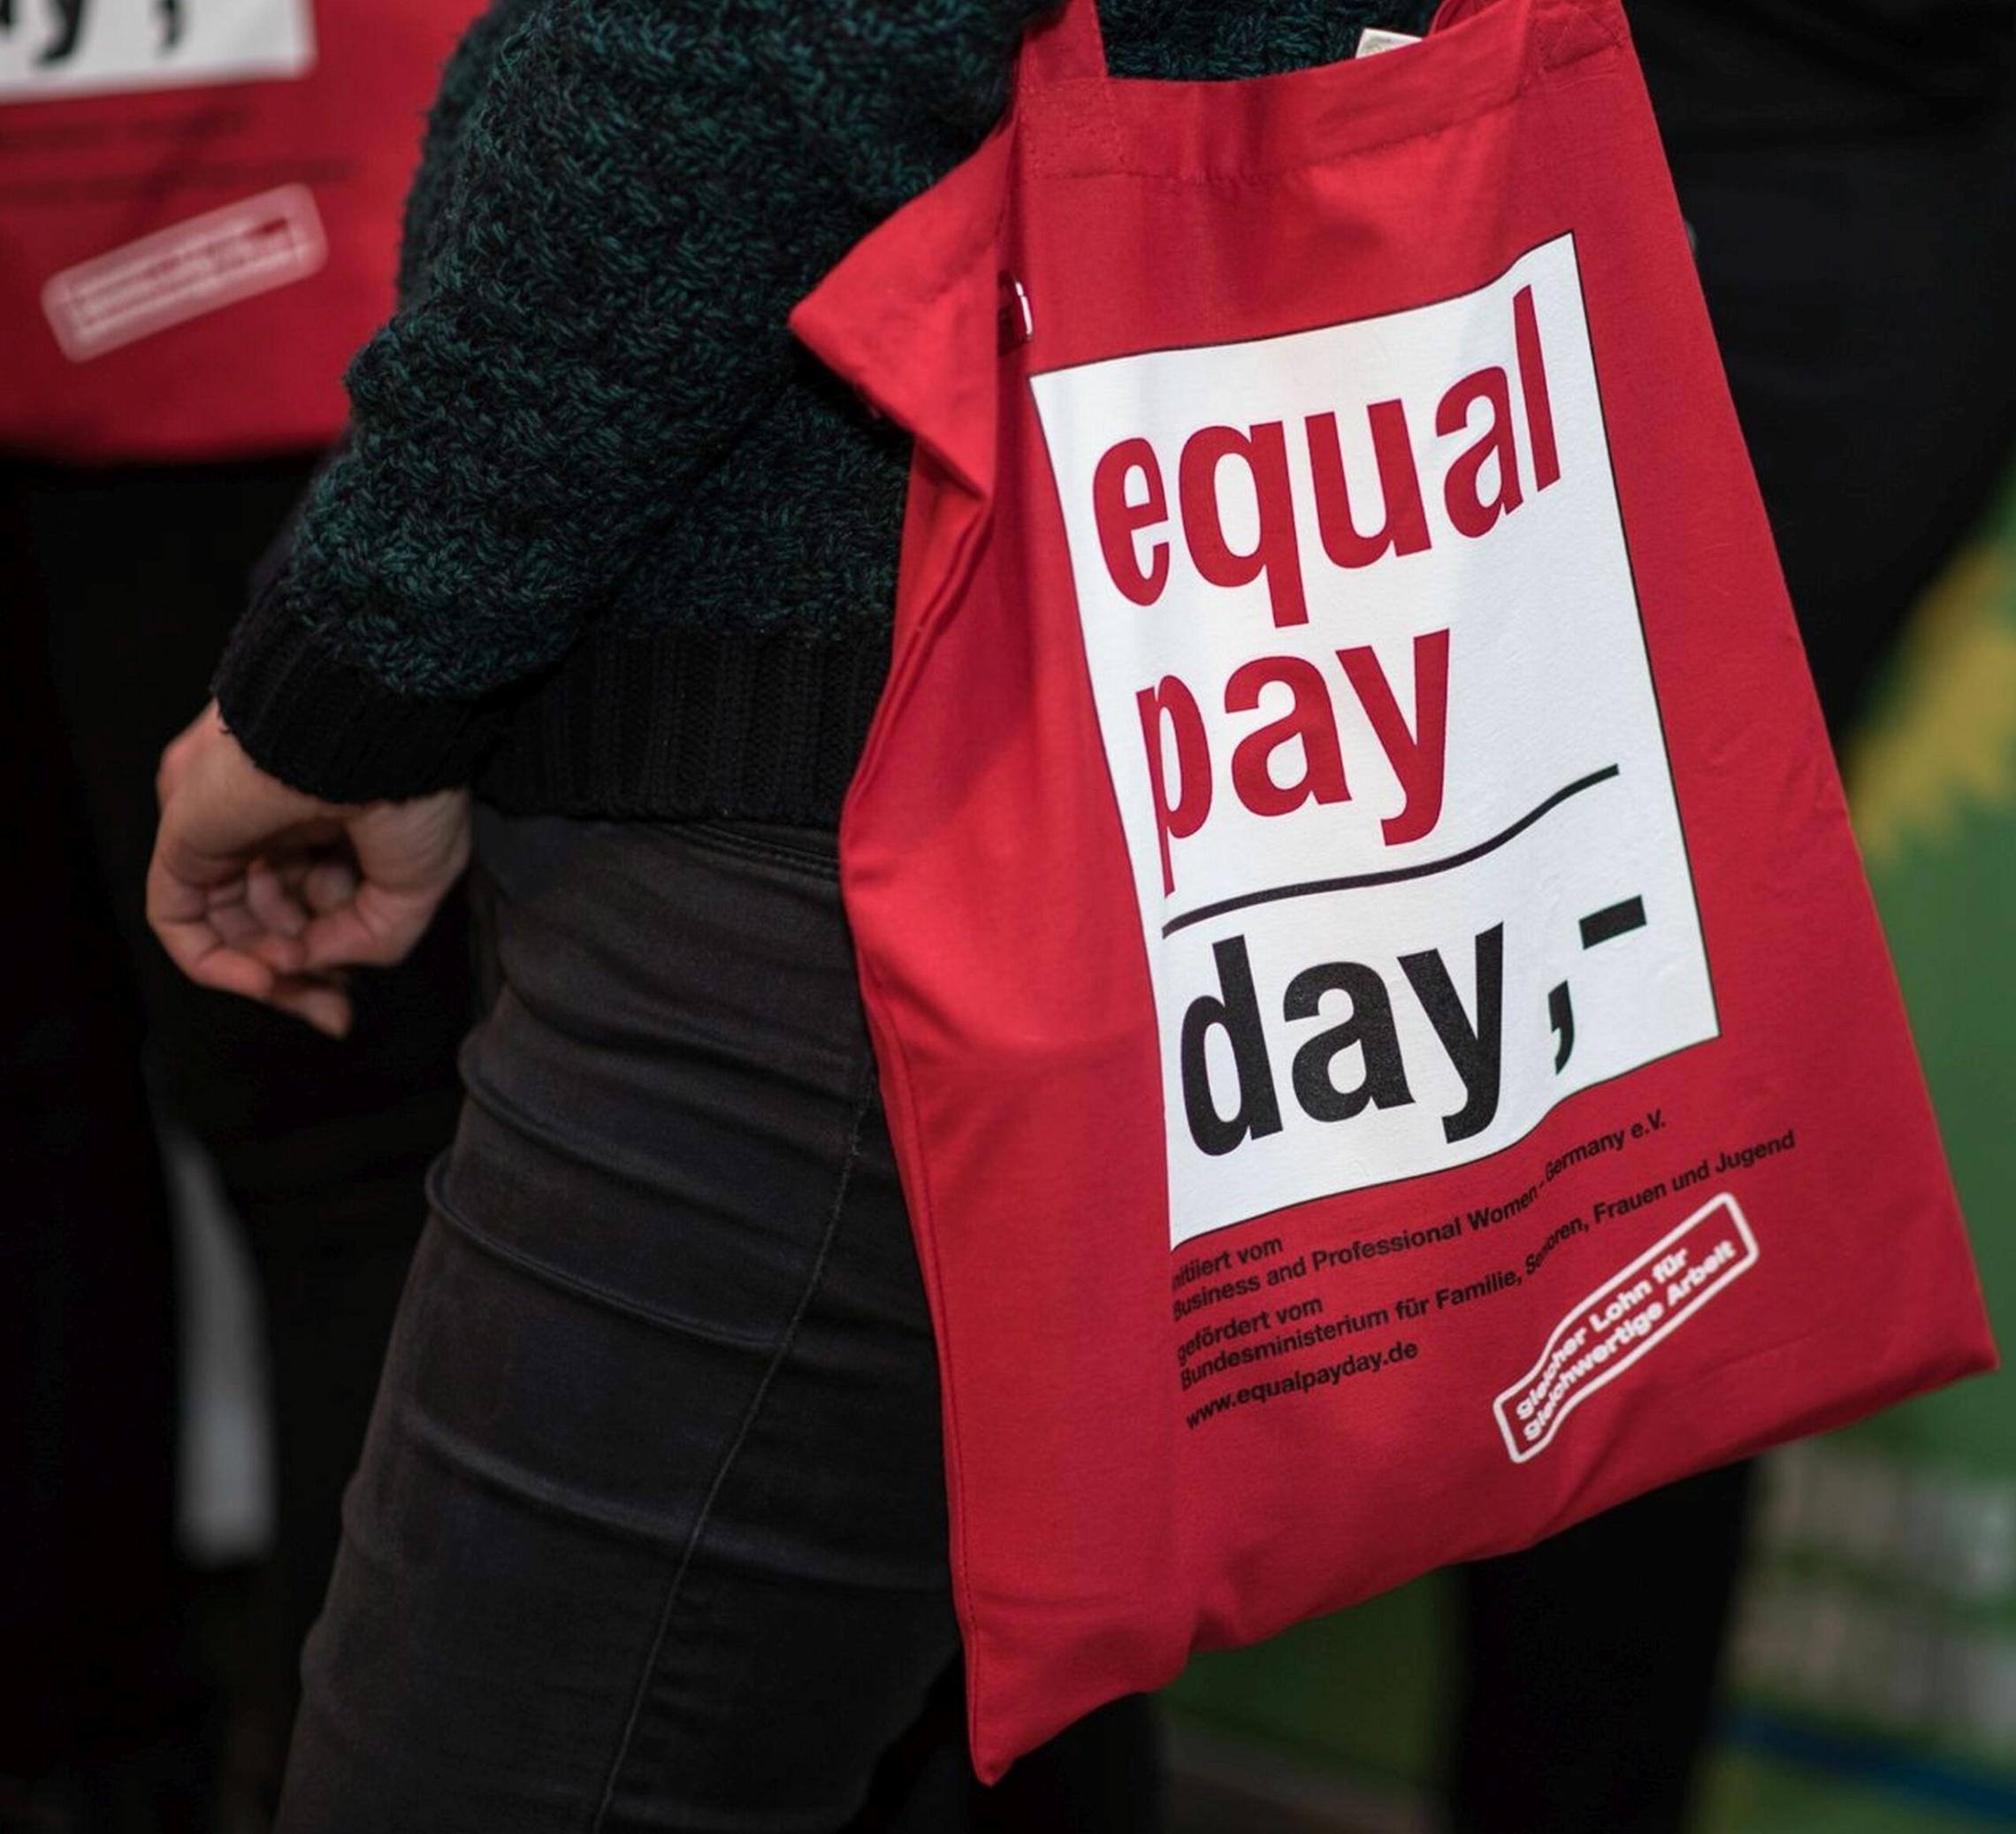 Equal Pay Day Tasche (c) BPW Germany e.V.